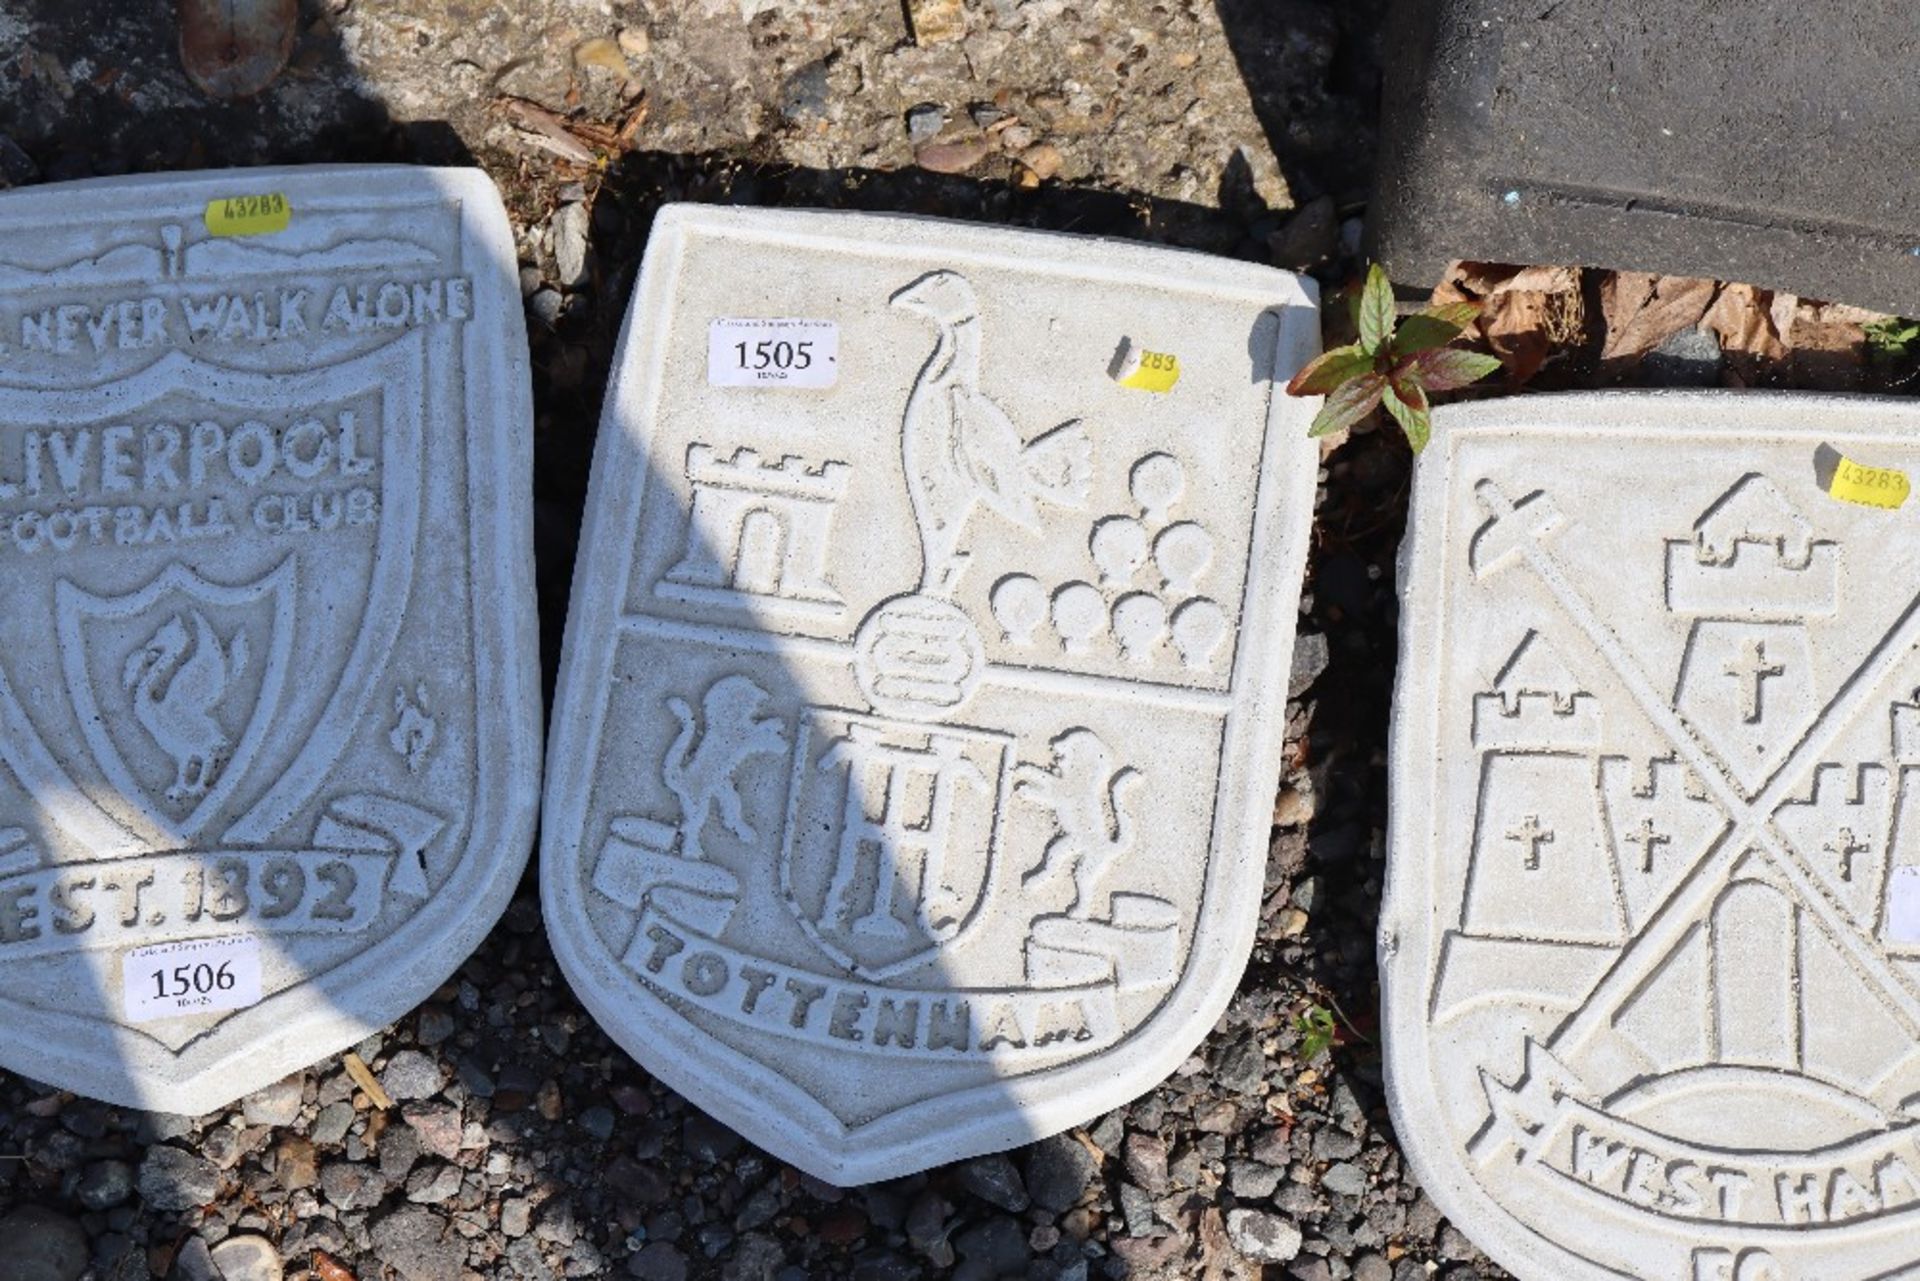 A cast concrete garden plaque for Tottenham Footba